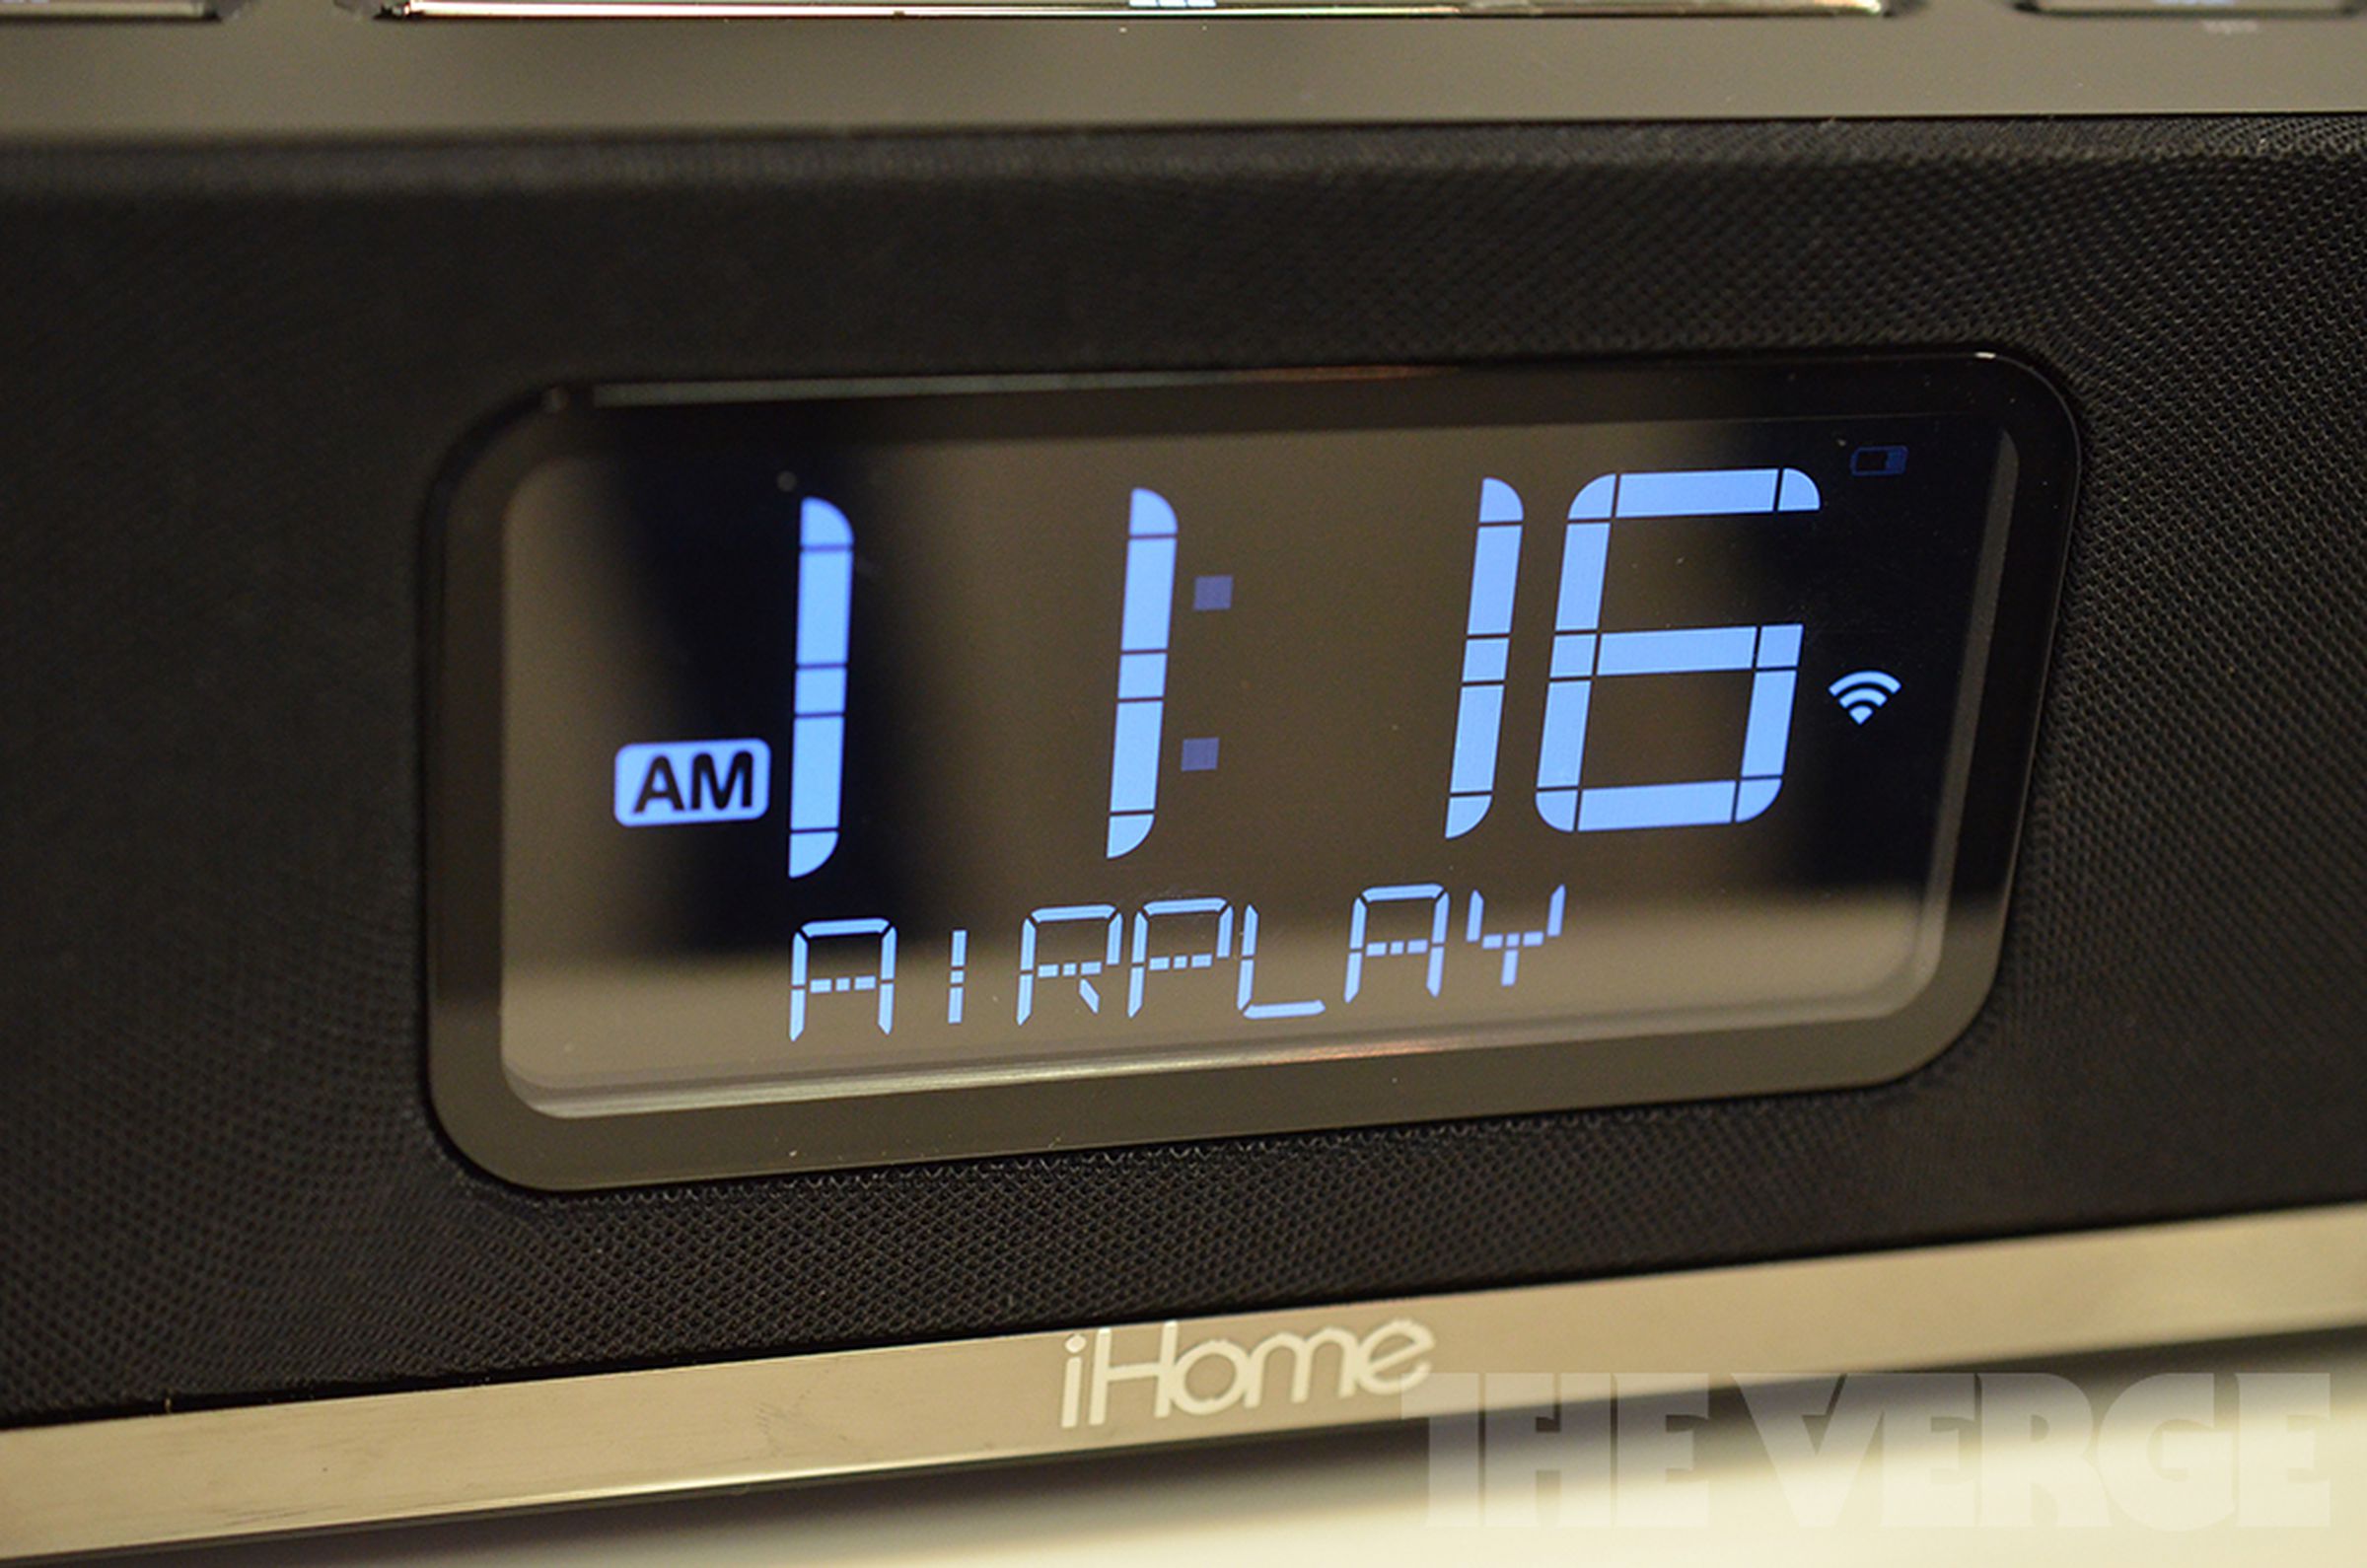 iHome iW4 AirPlay alarm clock hands-on photos